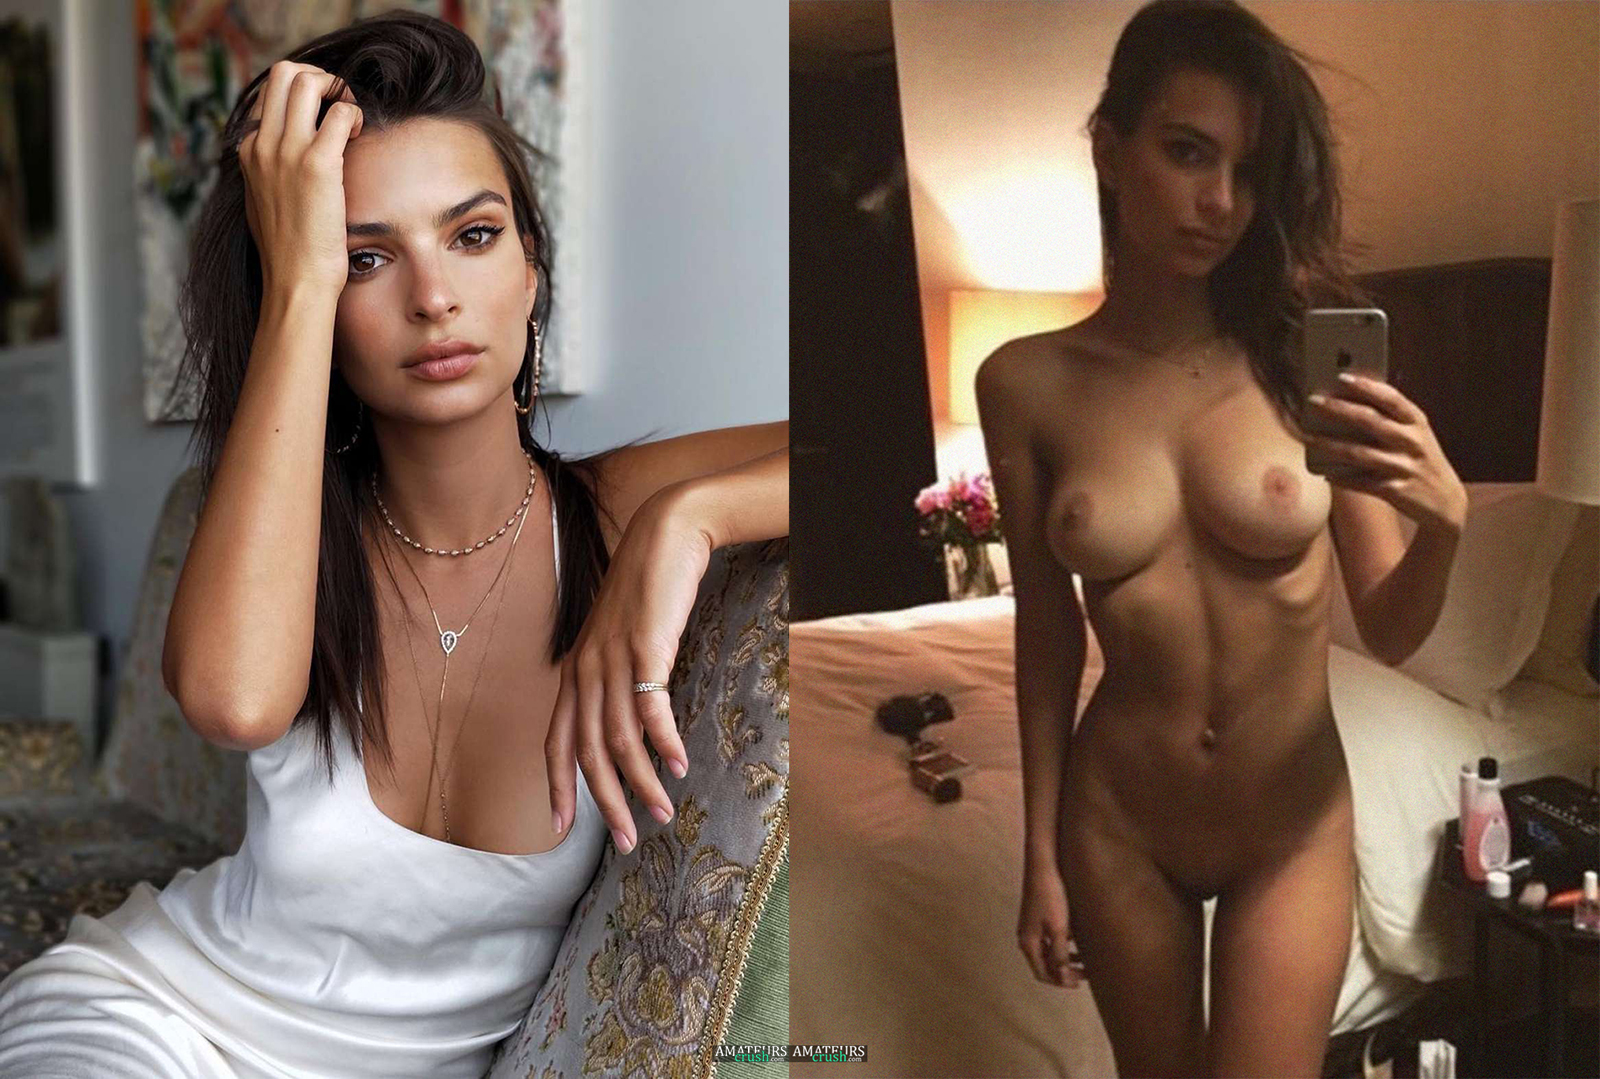 Celebrity nude photo leaks